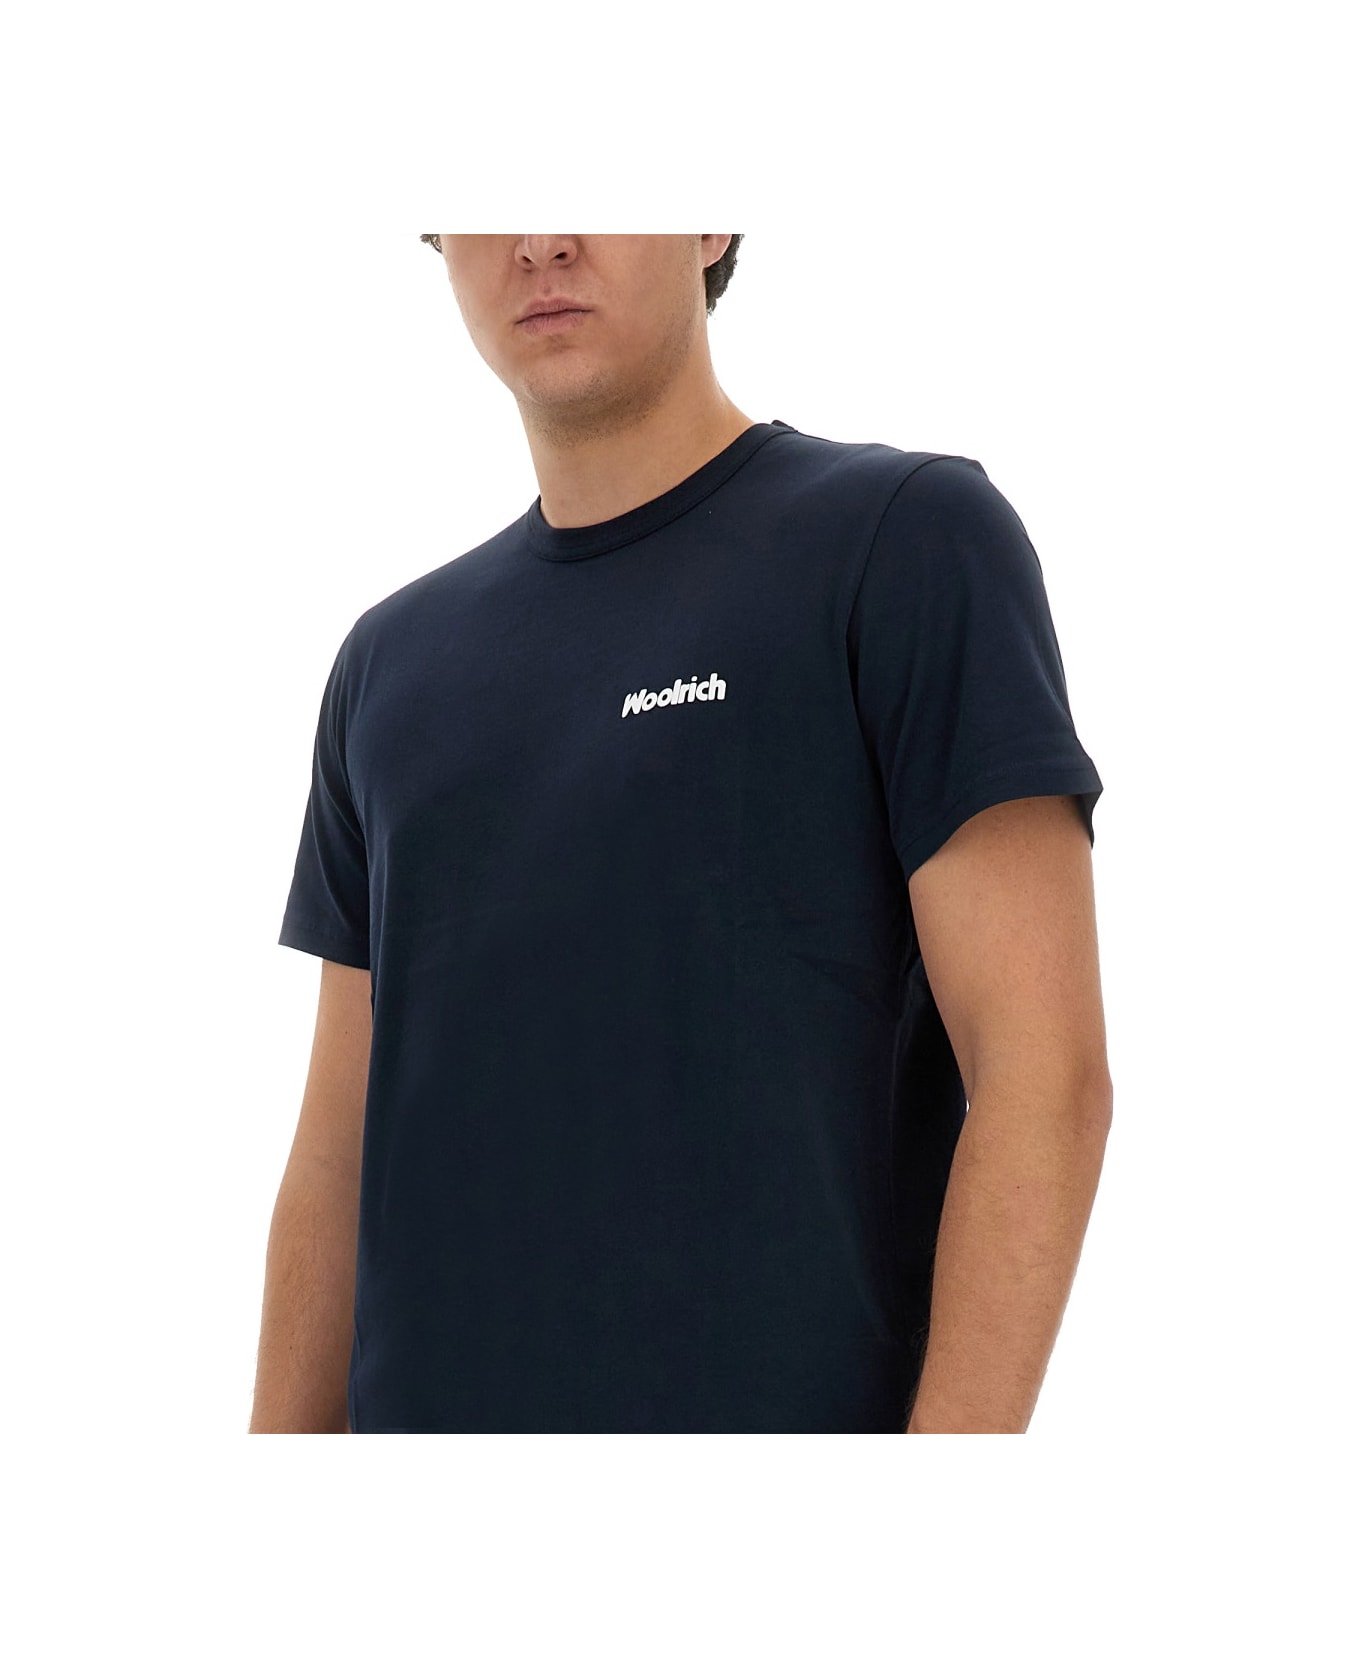 Woolrich T-shirt With Logo - BLUE